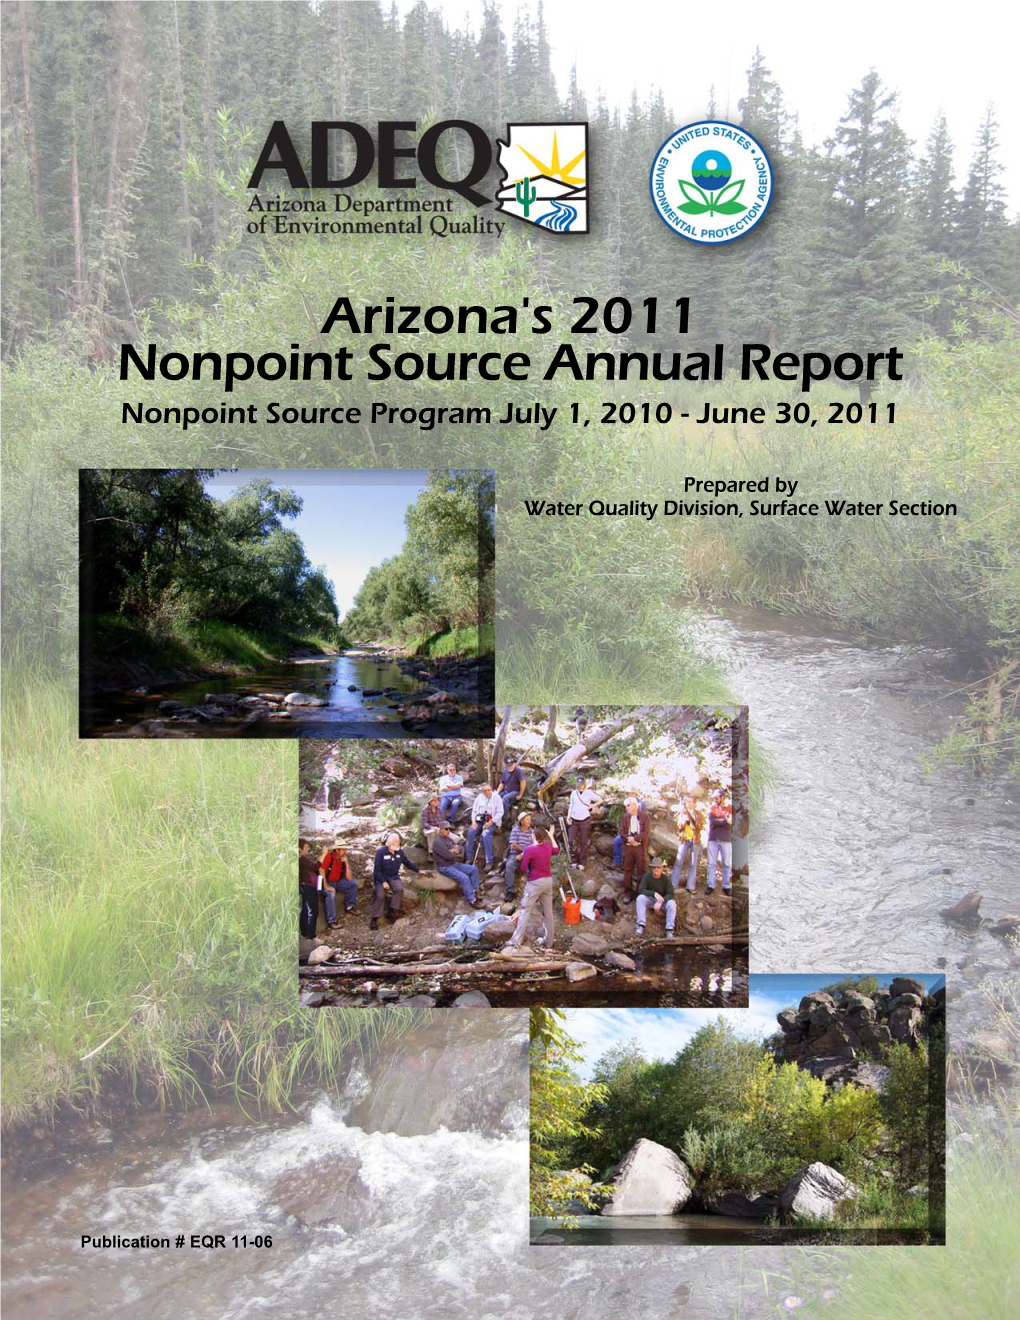 Arizona's Nonpoint Source Annual Report